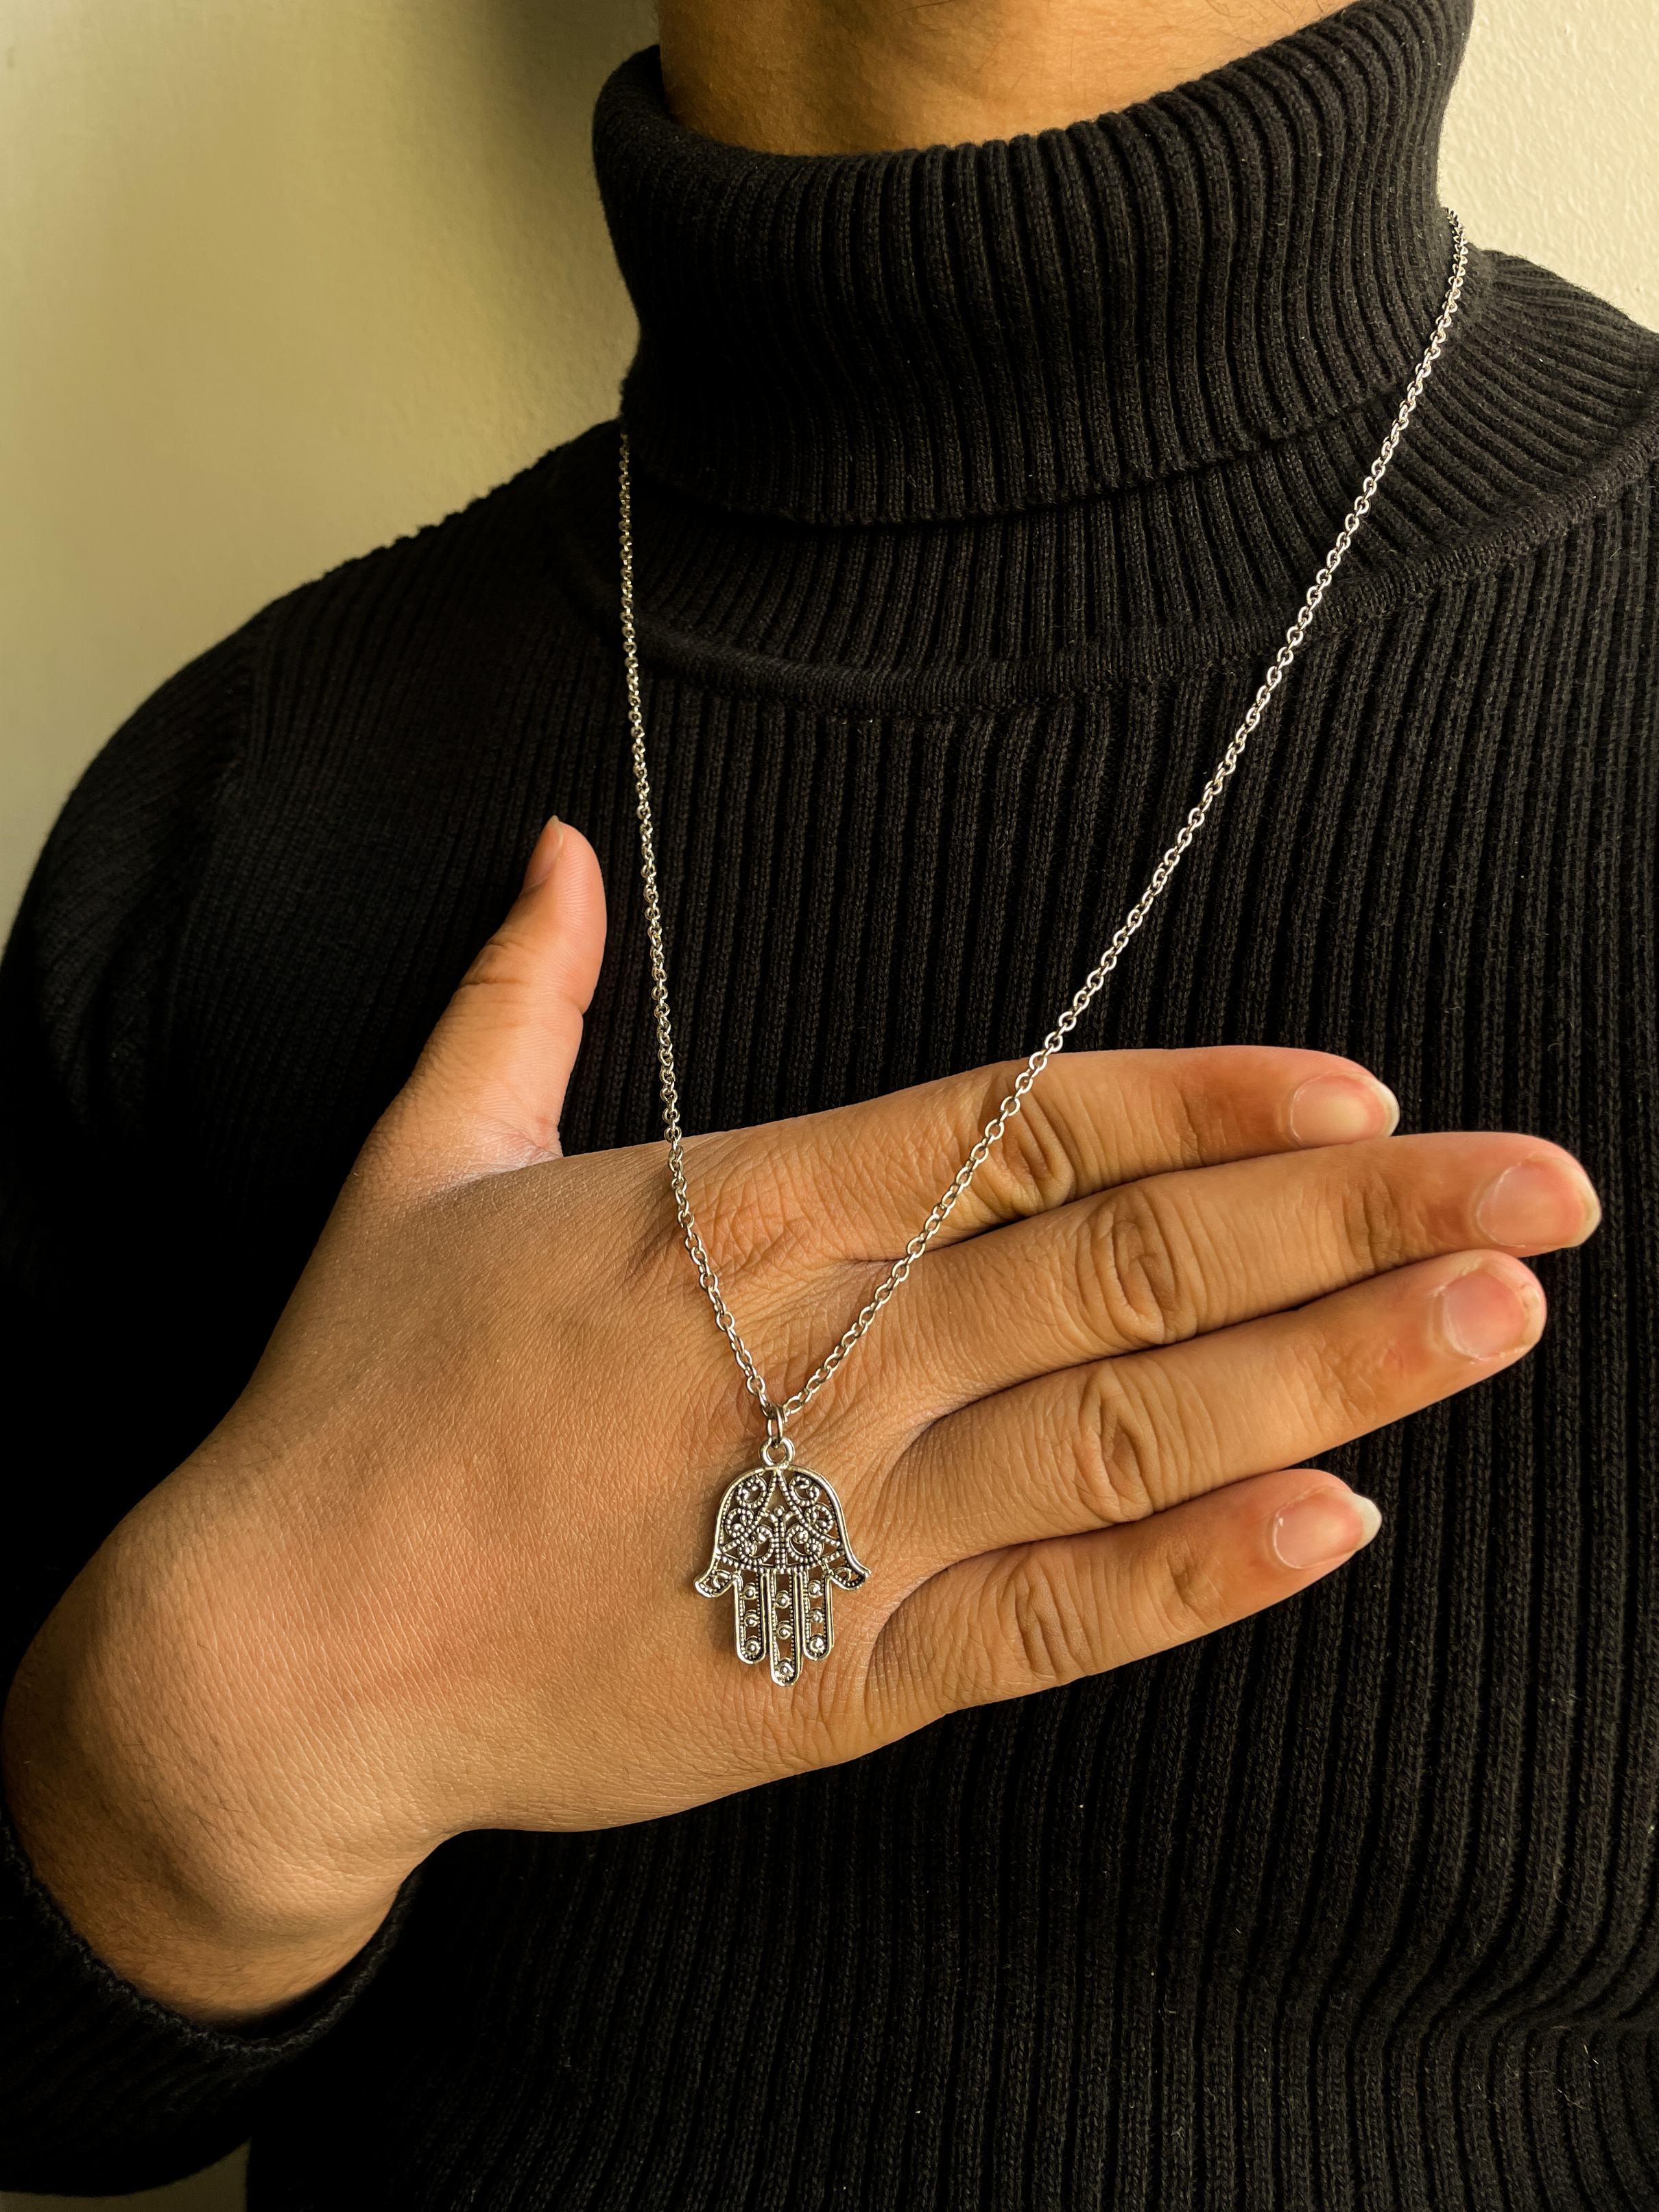 18K Hamsa Necklace, Hamsa Hand Pendant Necklace, Mens Necklace, Protection,  | eBay